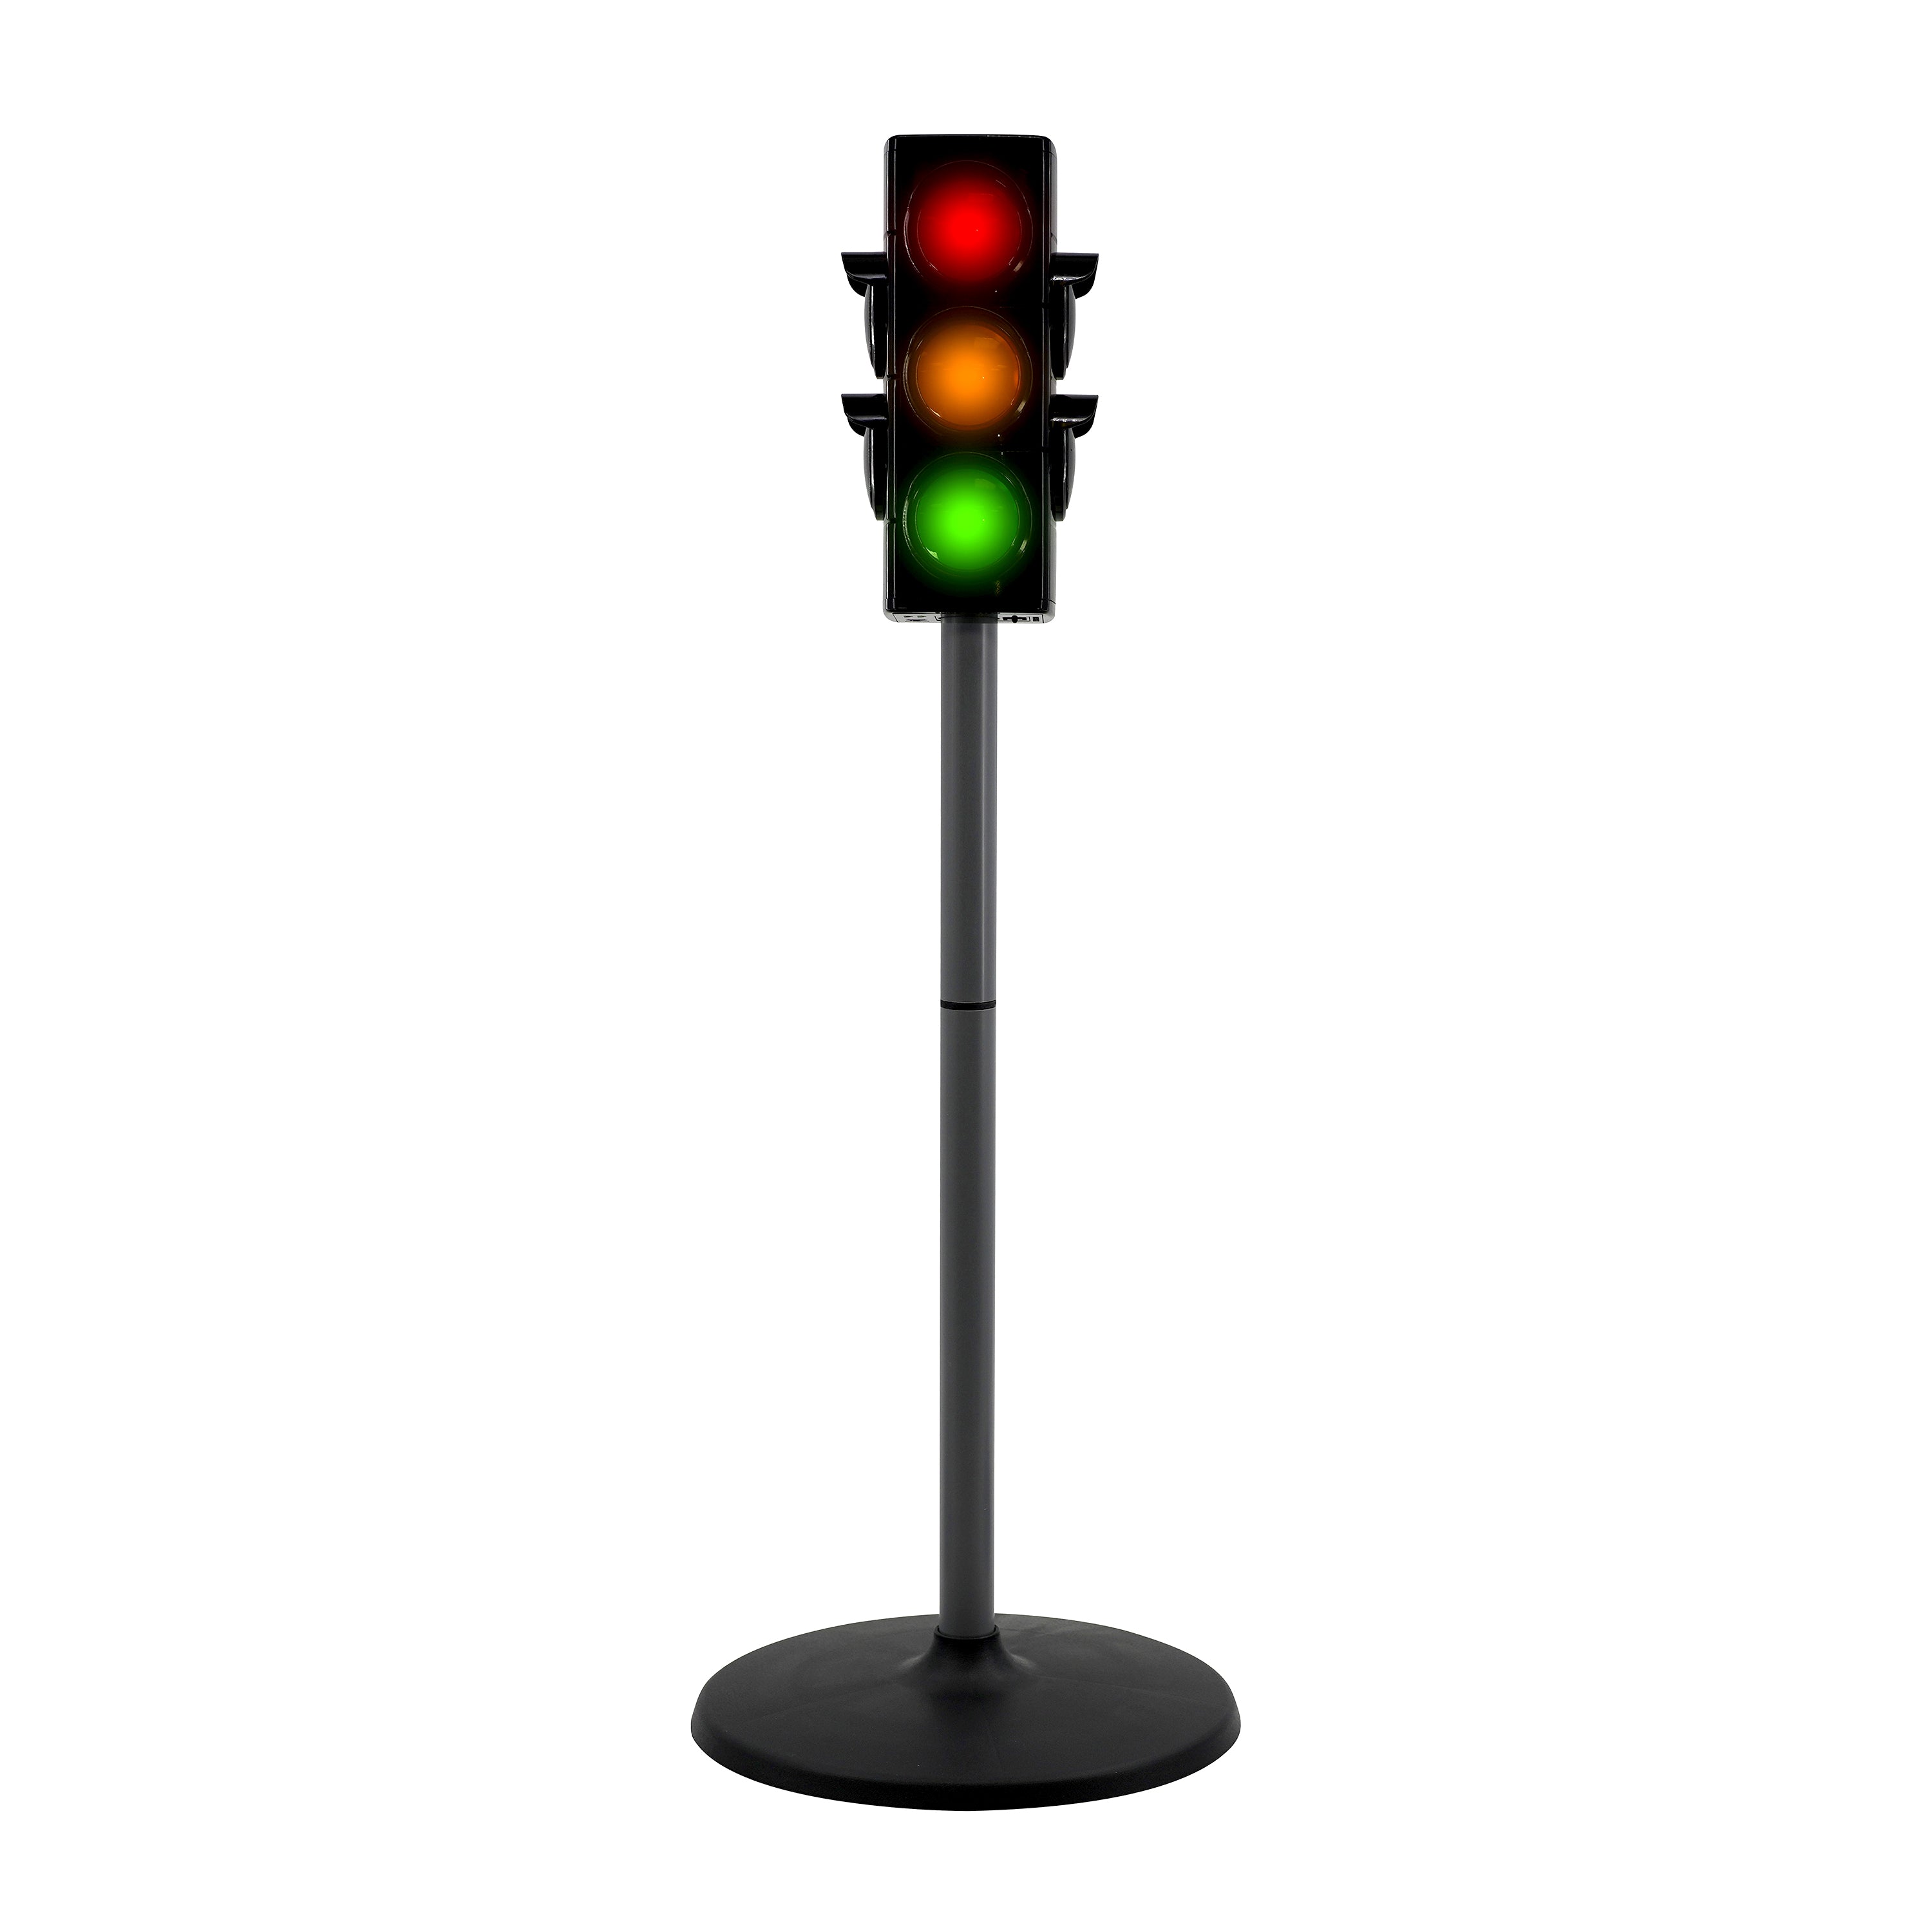 Traffic Signal & Crosswalk Lights Playset The Magic Toy Shop - The Magic Toy Shop